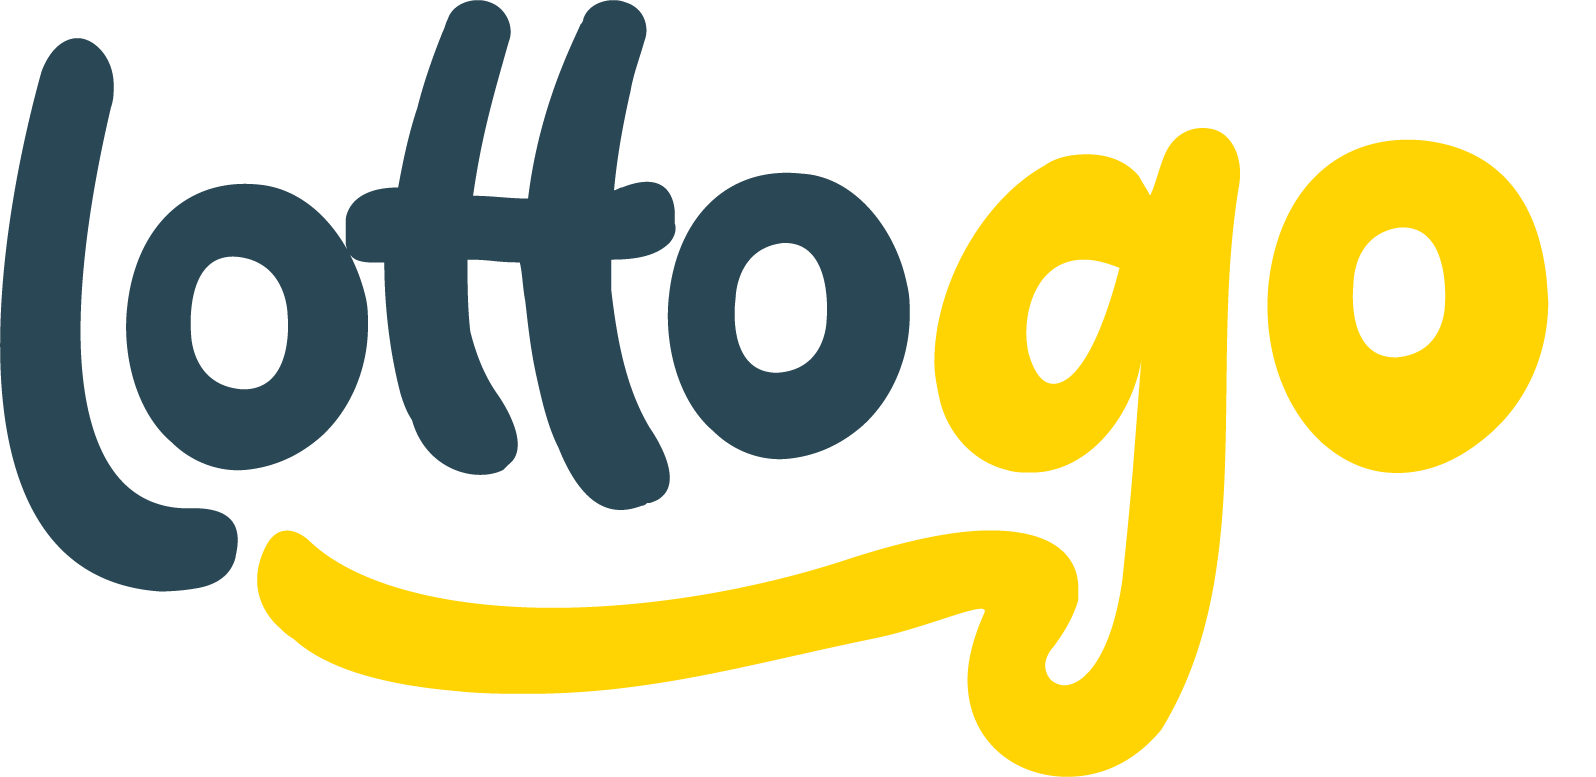 Lottogo